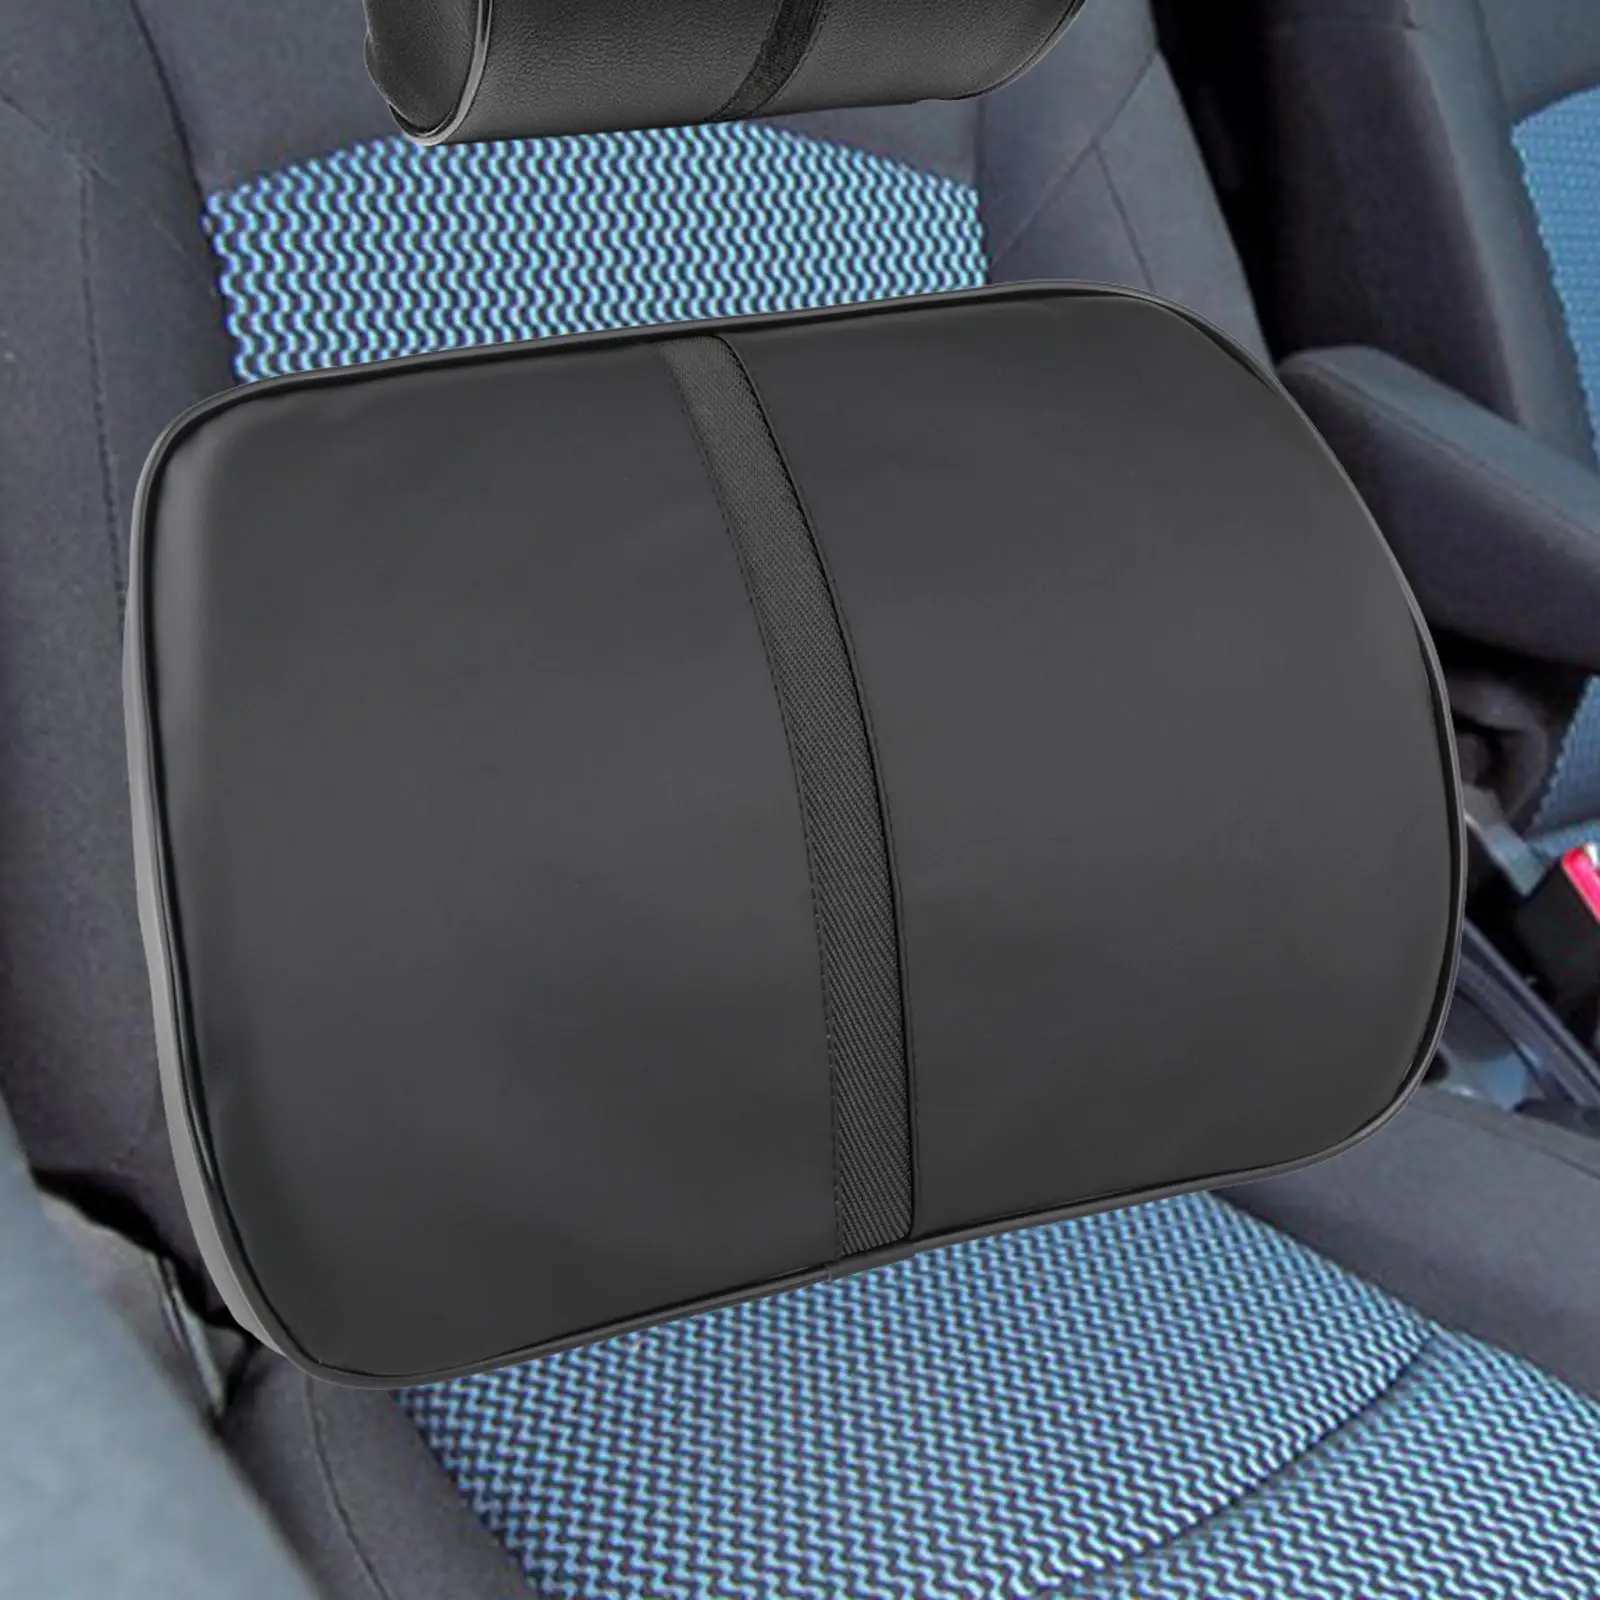 Car Back Support Pillow Ergonomic Design Car Waist Pillow Car Back Support Cushion Back Rest Cushion for Seat Accessories